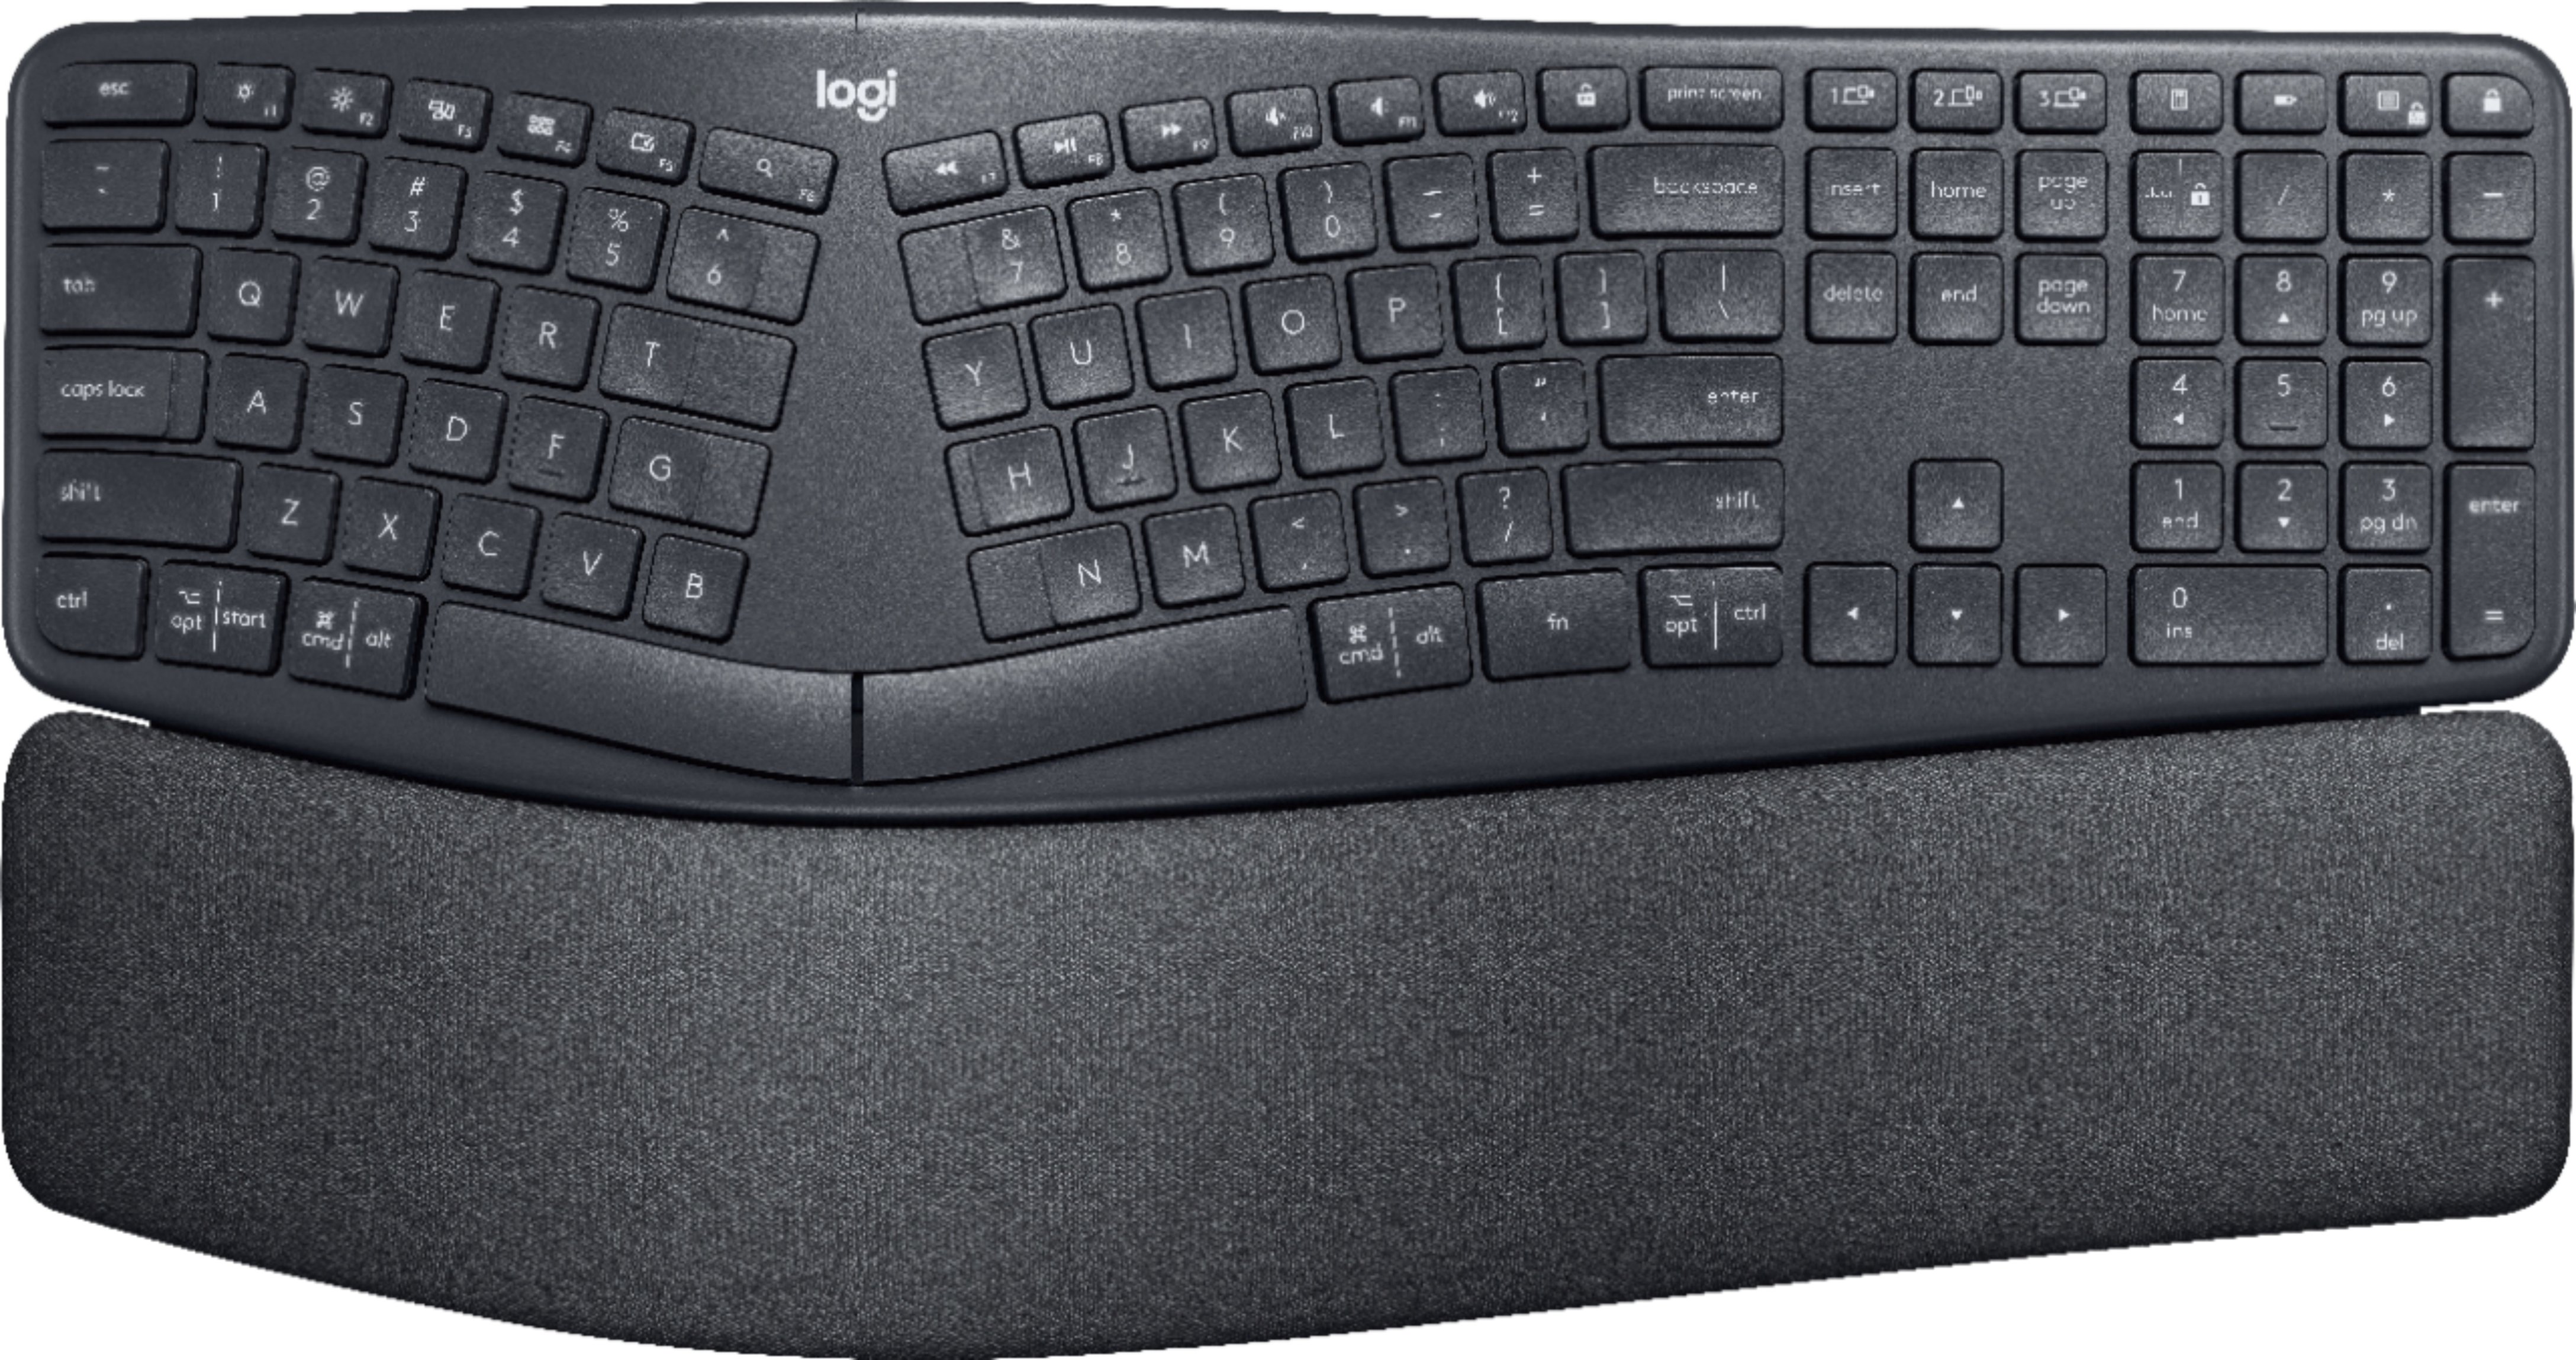 Microsoft Ergonomic Keyboard - Microsoft Accessories